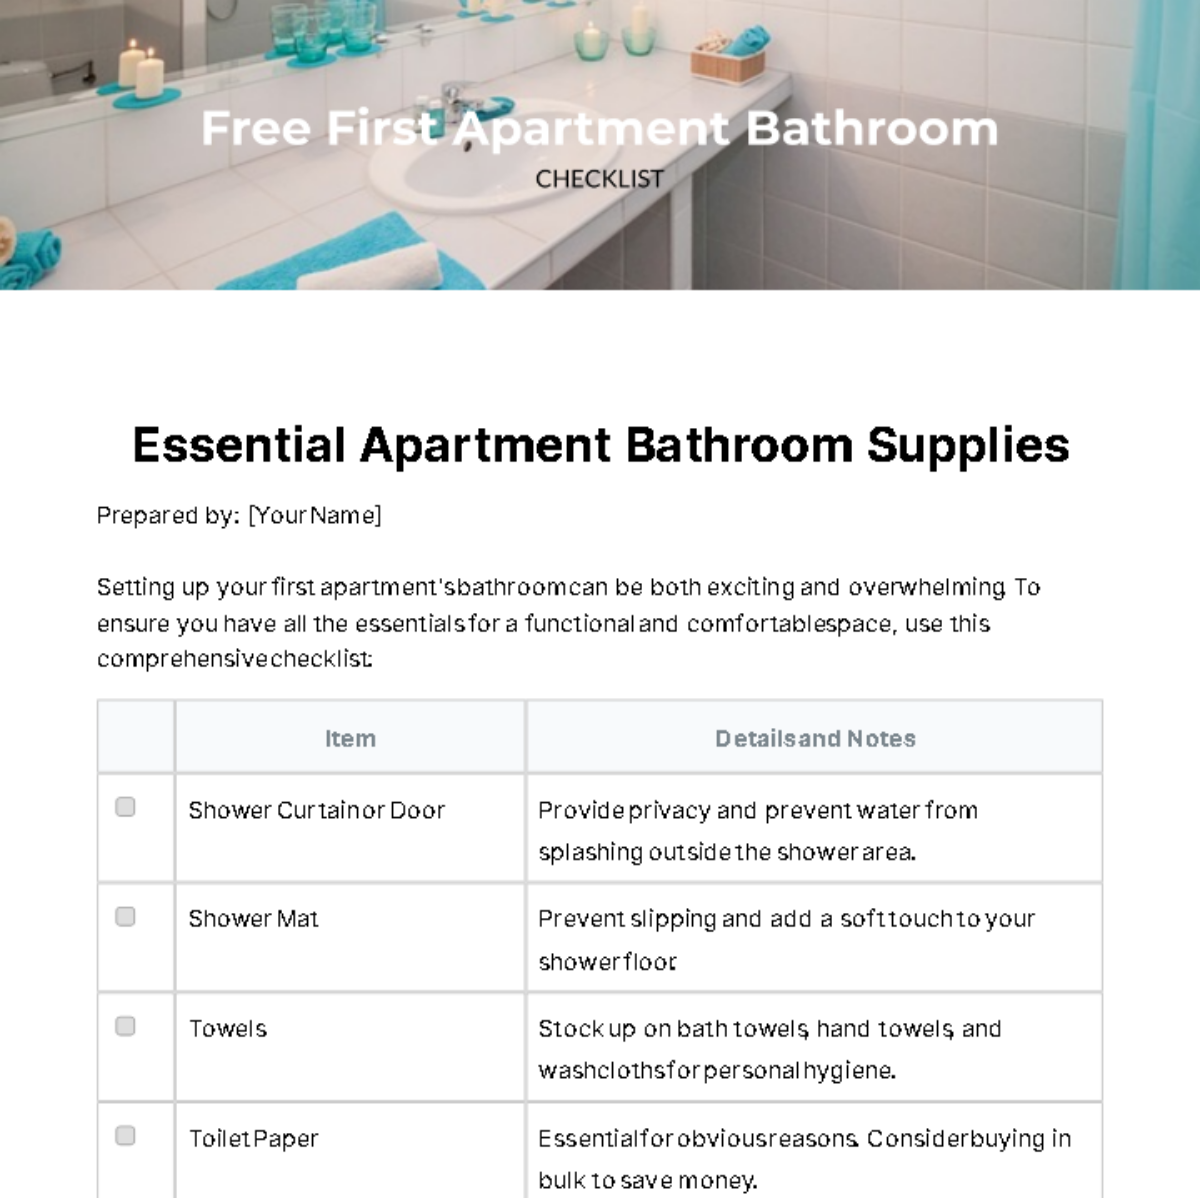 Free First Apartment Bathroom Checklist Template